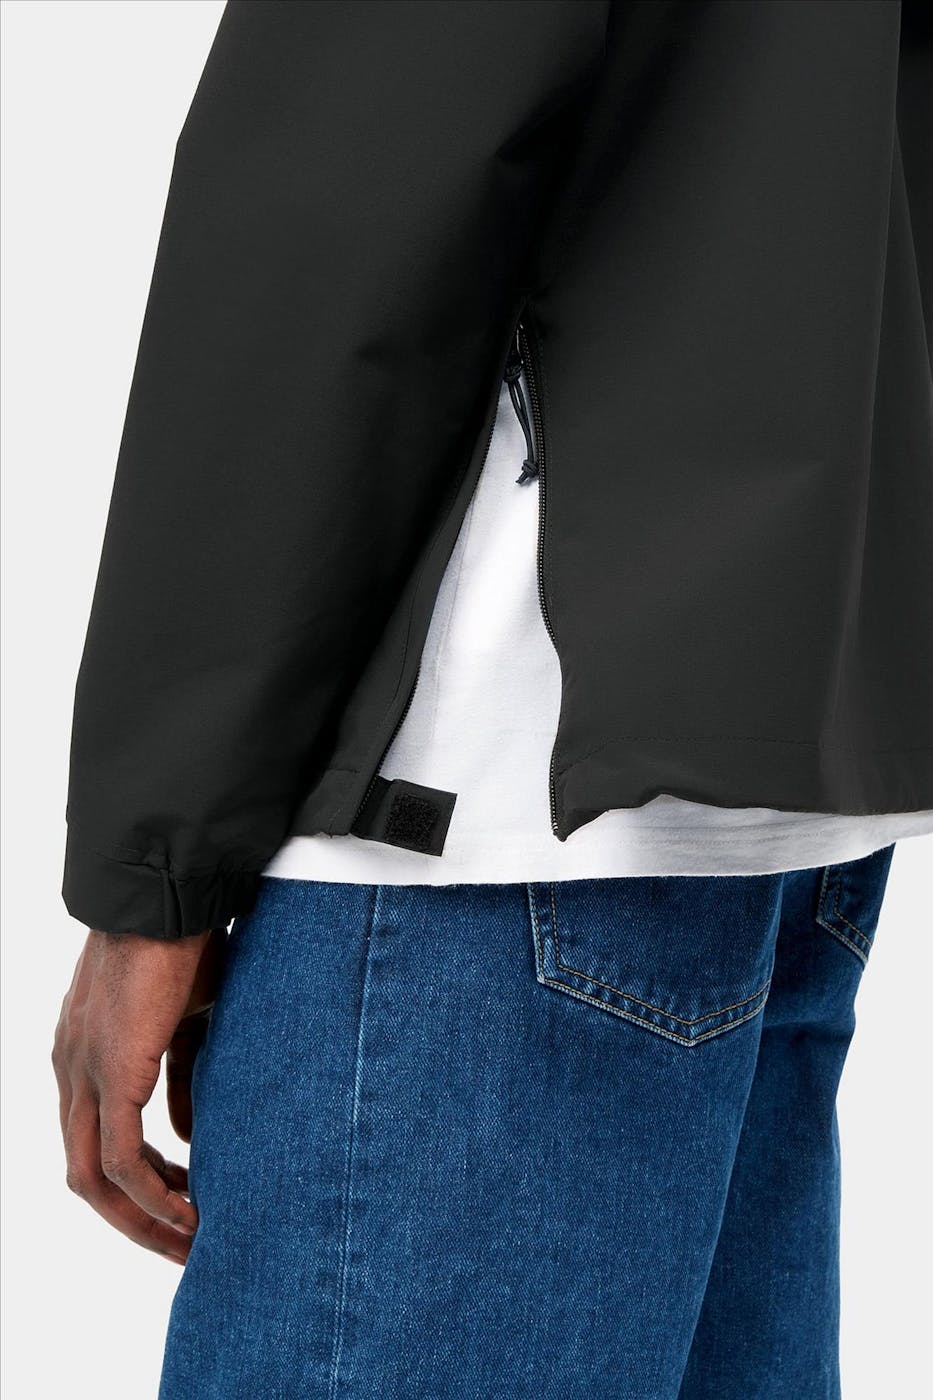 Carhartt WIP - Zwarte Nimbus pullover jacket